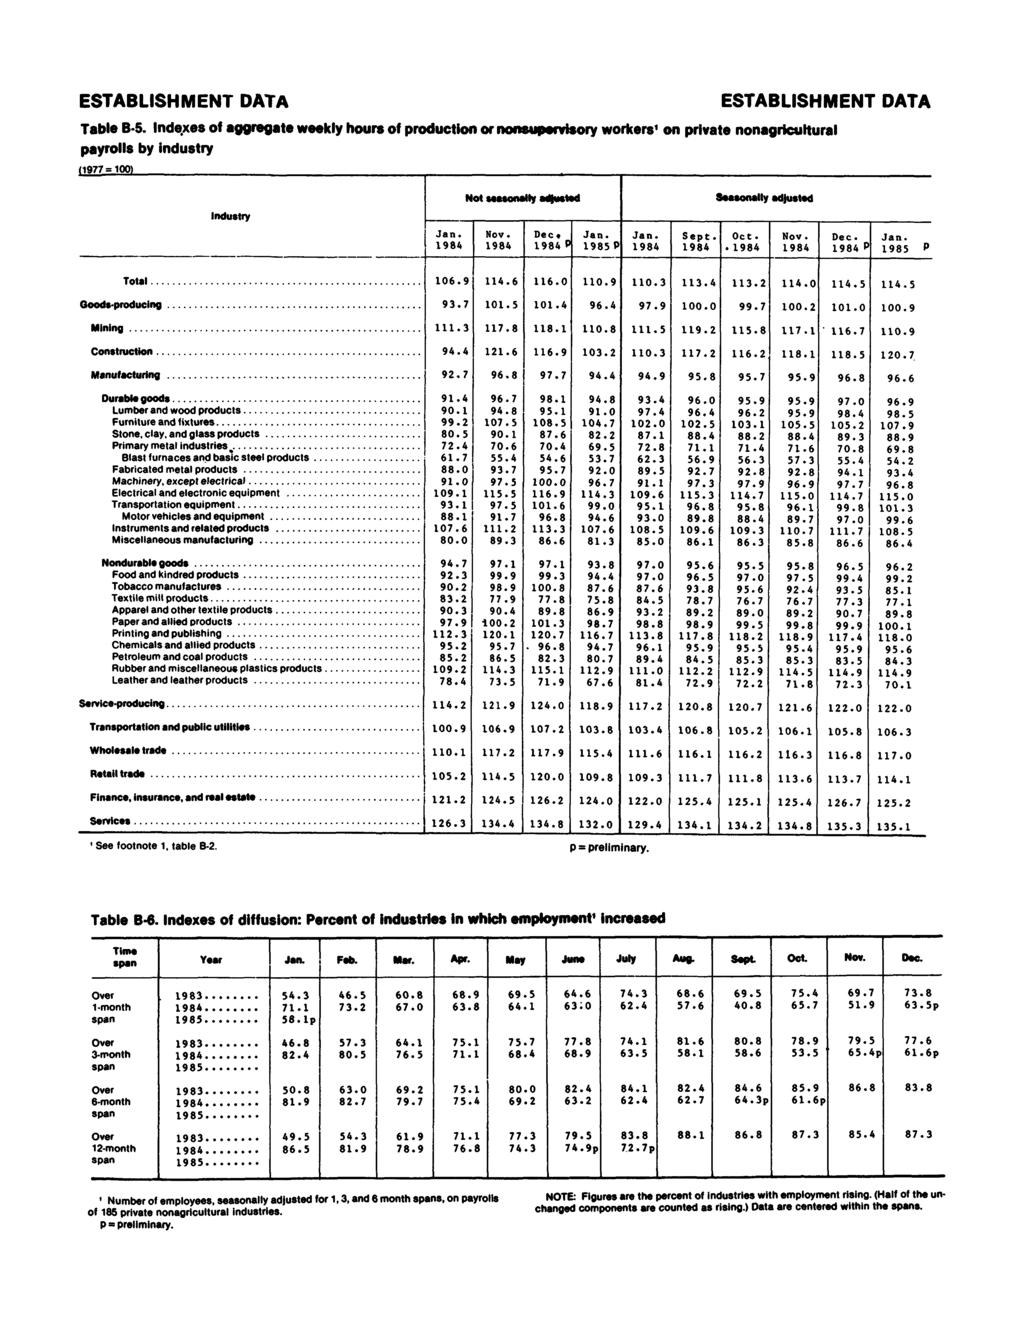 ESTABLISHMENT DATA ESTABLISHMENT DATA Table B- Inde.